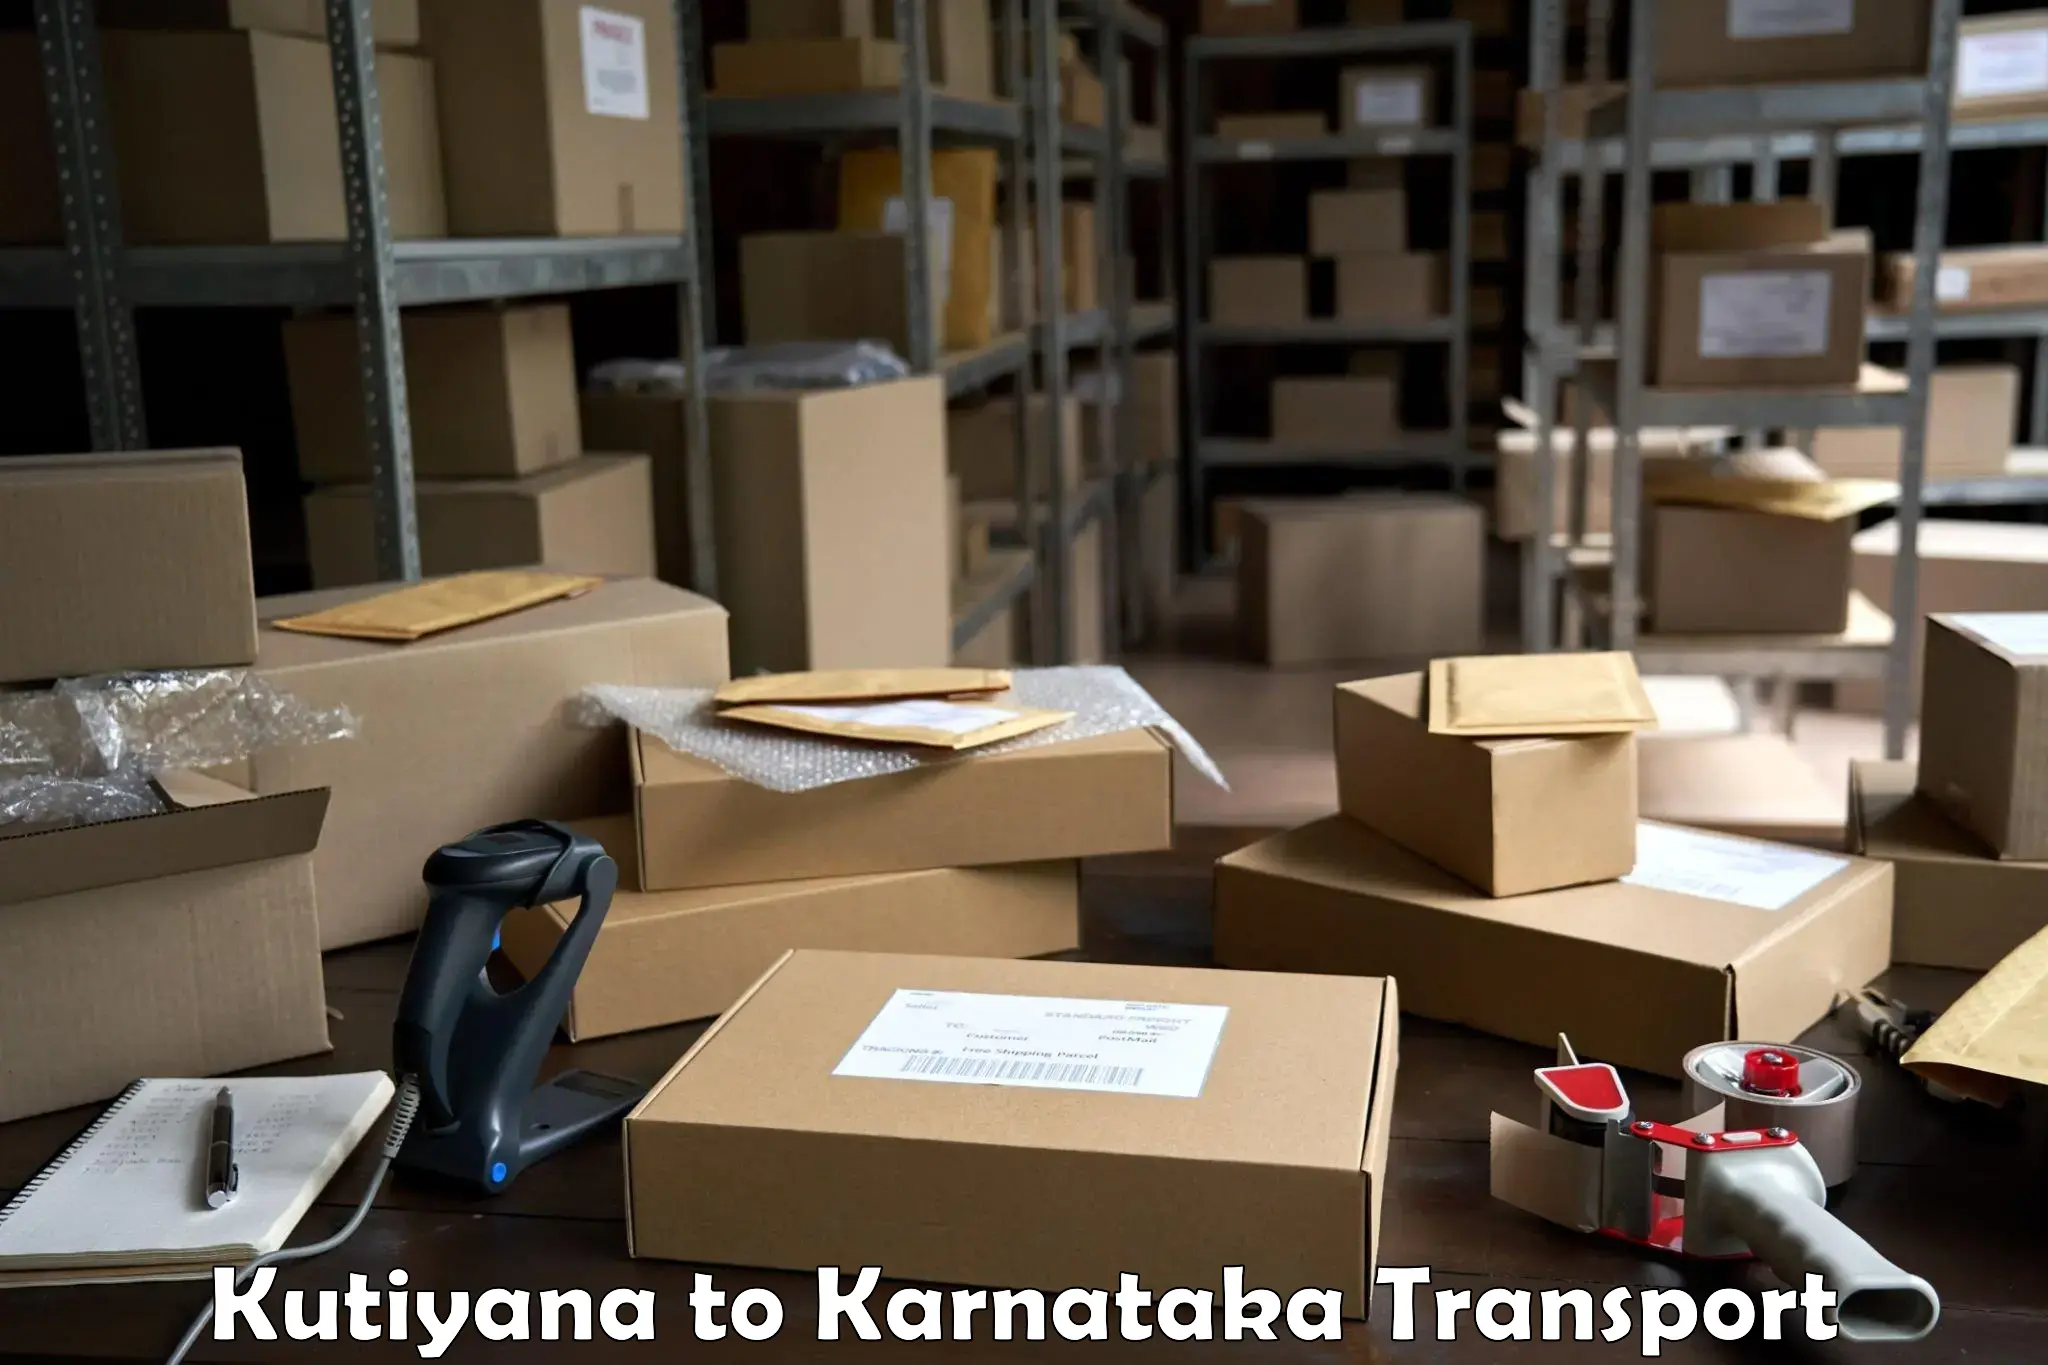 Delivery service Kutiyana to Karnataka